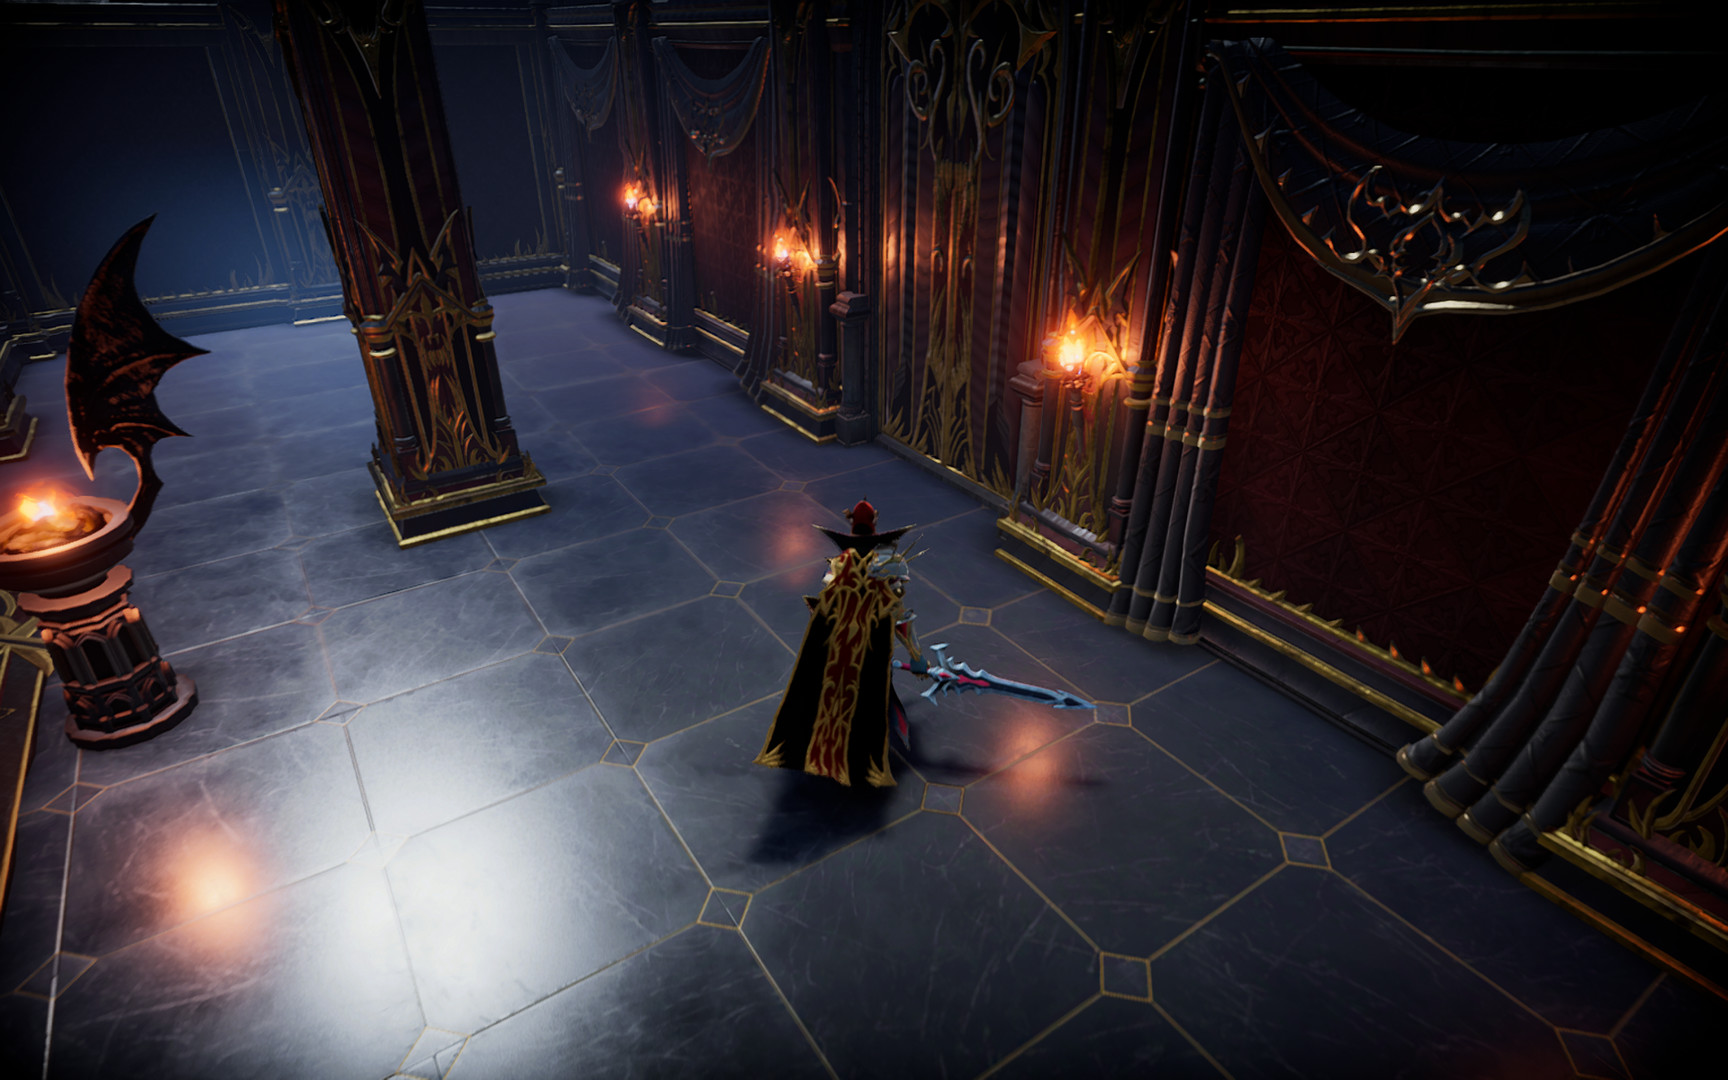 V Rising - Dracula's Relics Pack DLC Steam CD Key